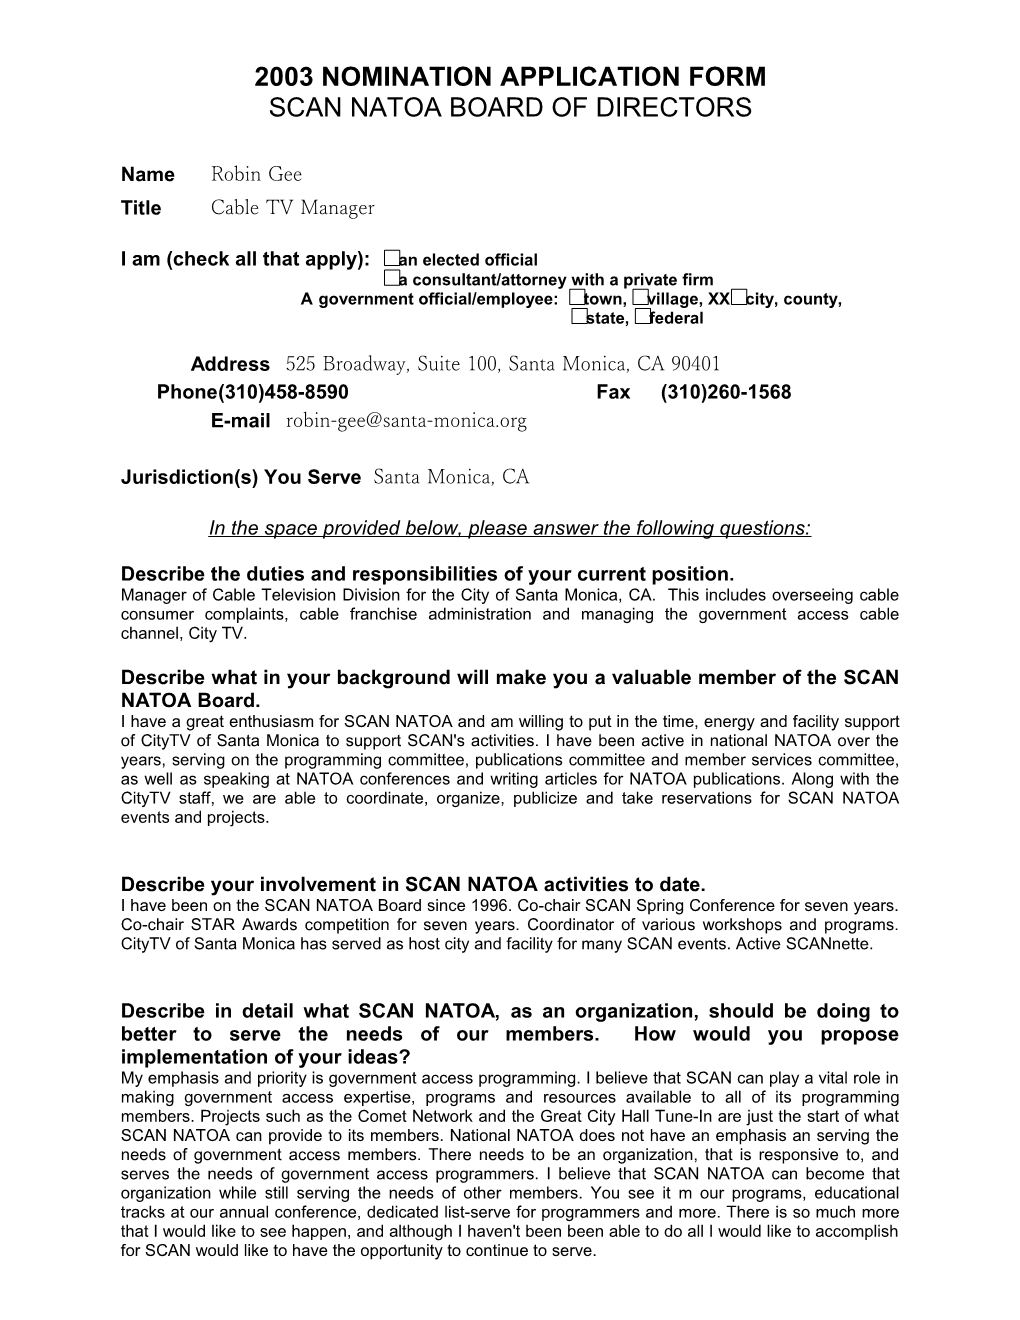 2001 Nomination Application Form